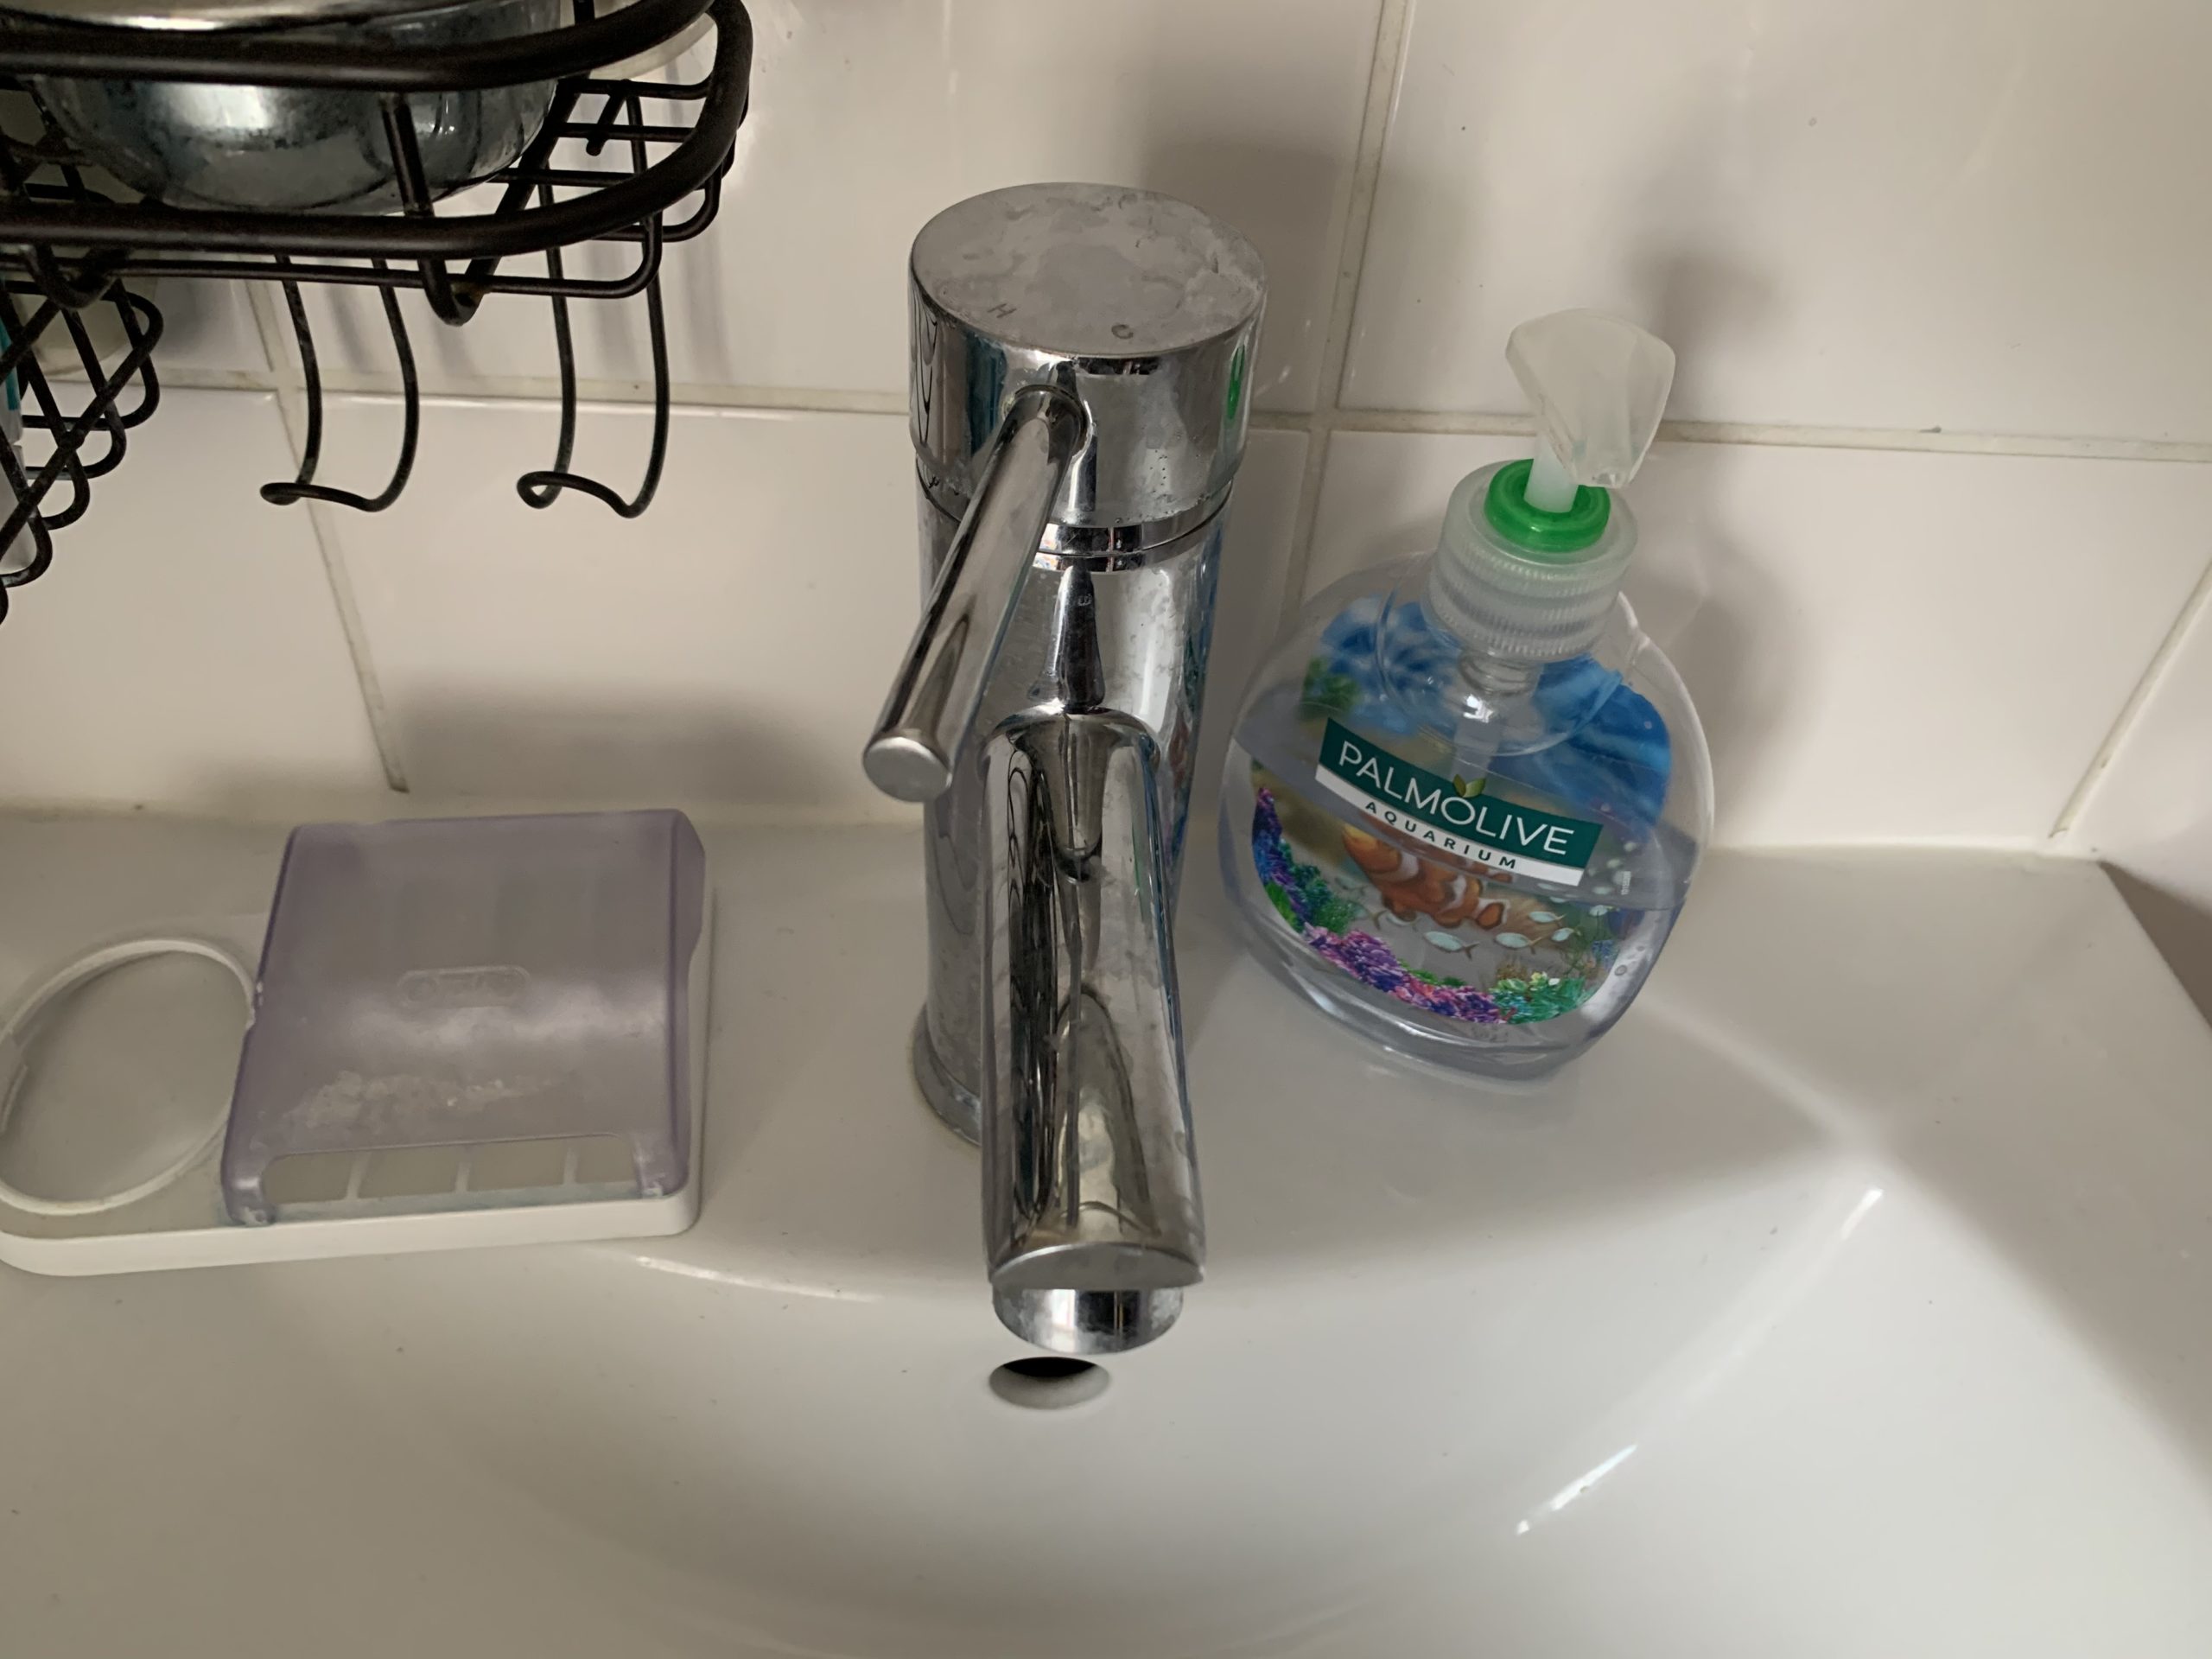 Photo showing monobloc mixer bathroom tap with liquid hand soap beside it.